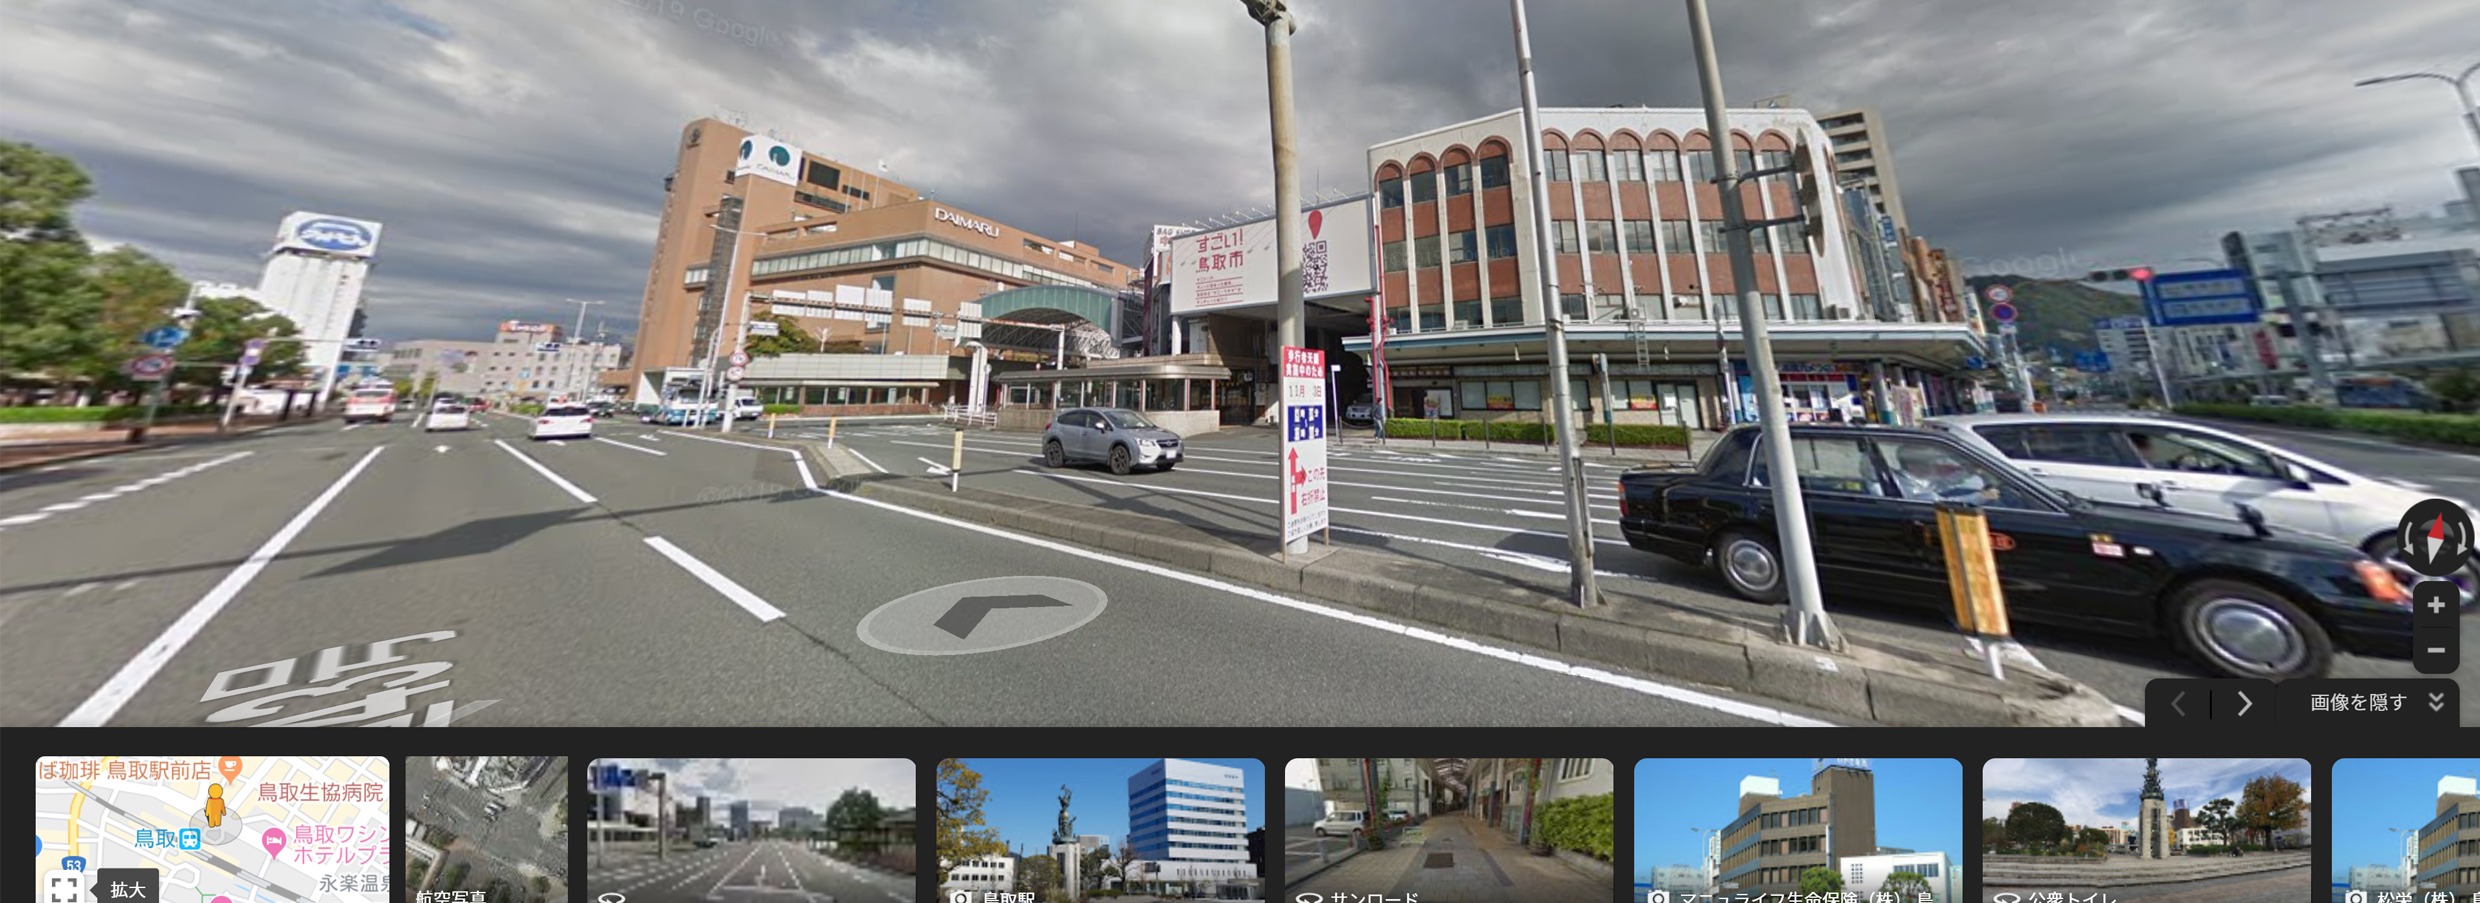 googleマップのストリートビュー画像